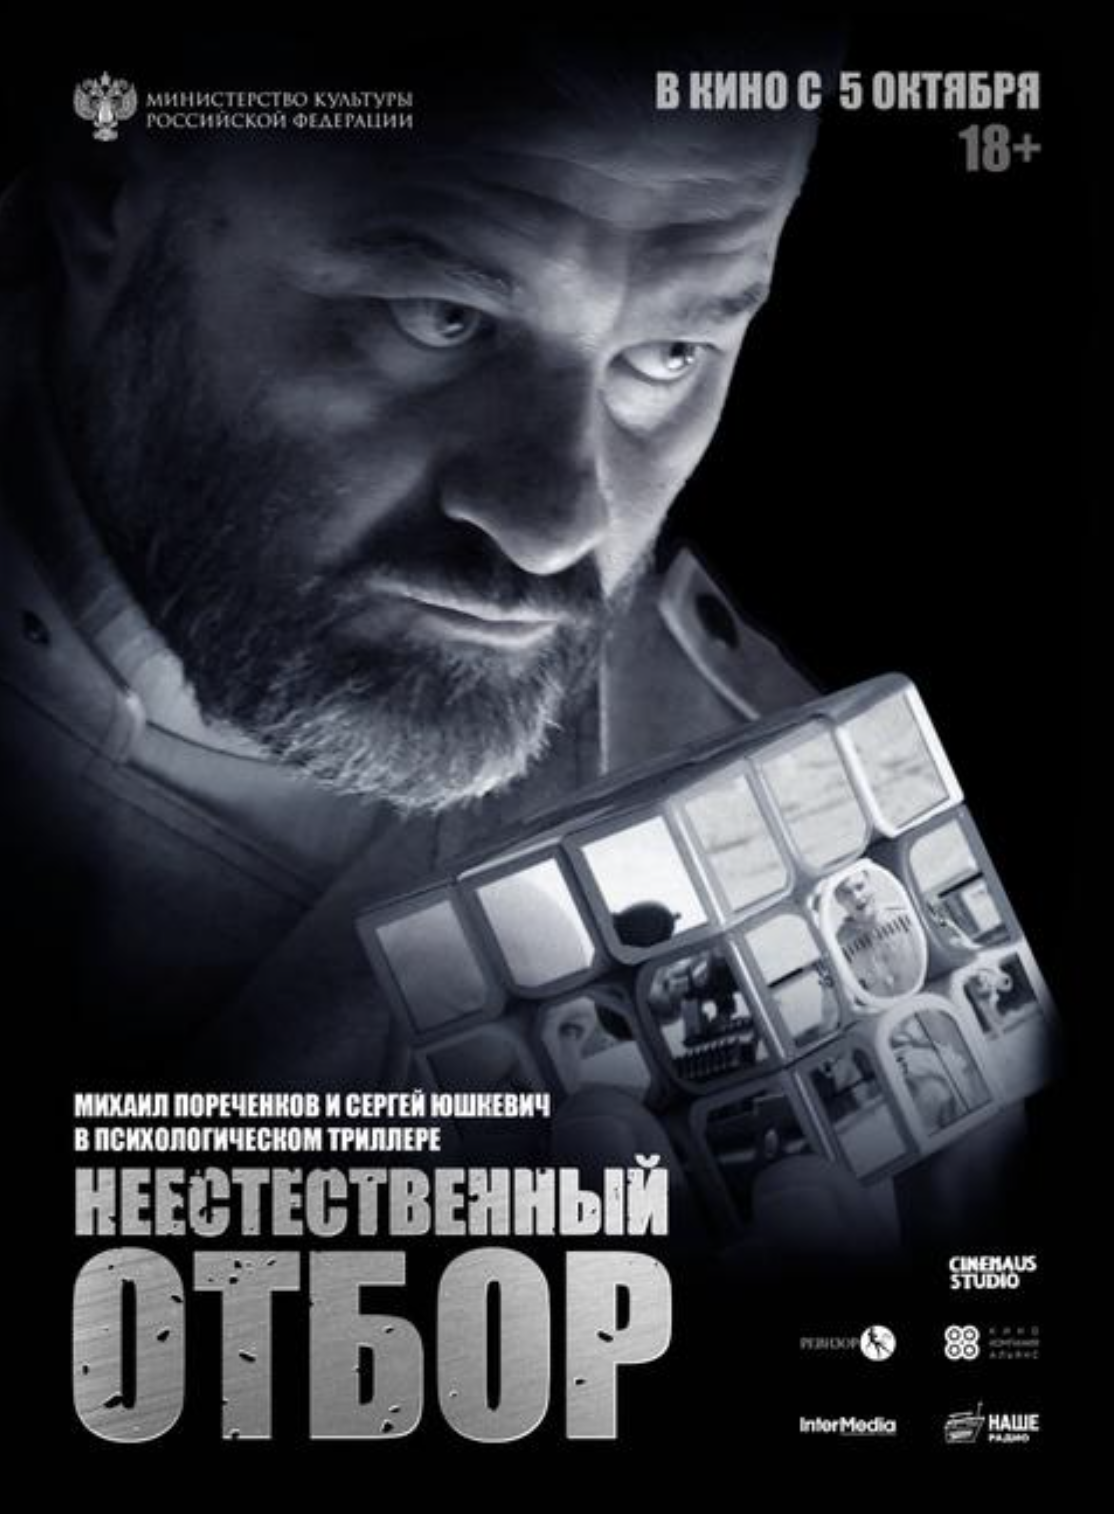 Сергей Юшкевич (Sergey Yushkevich) биография, фильмы, спектакли, фото |  Afisha.ru